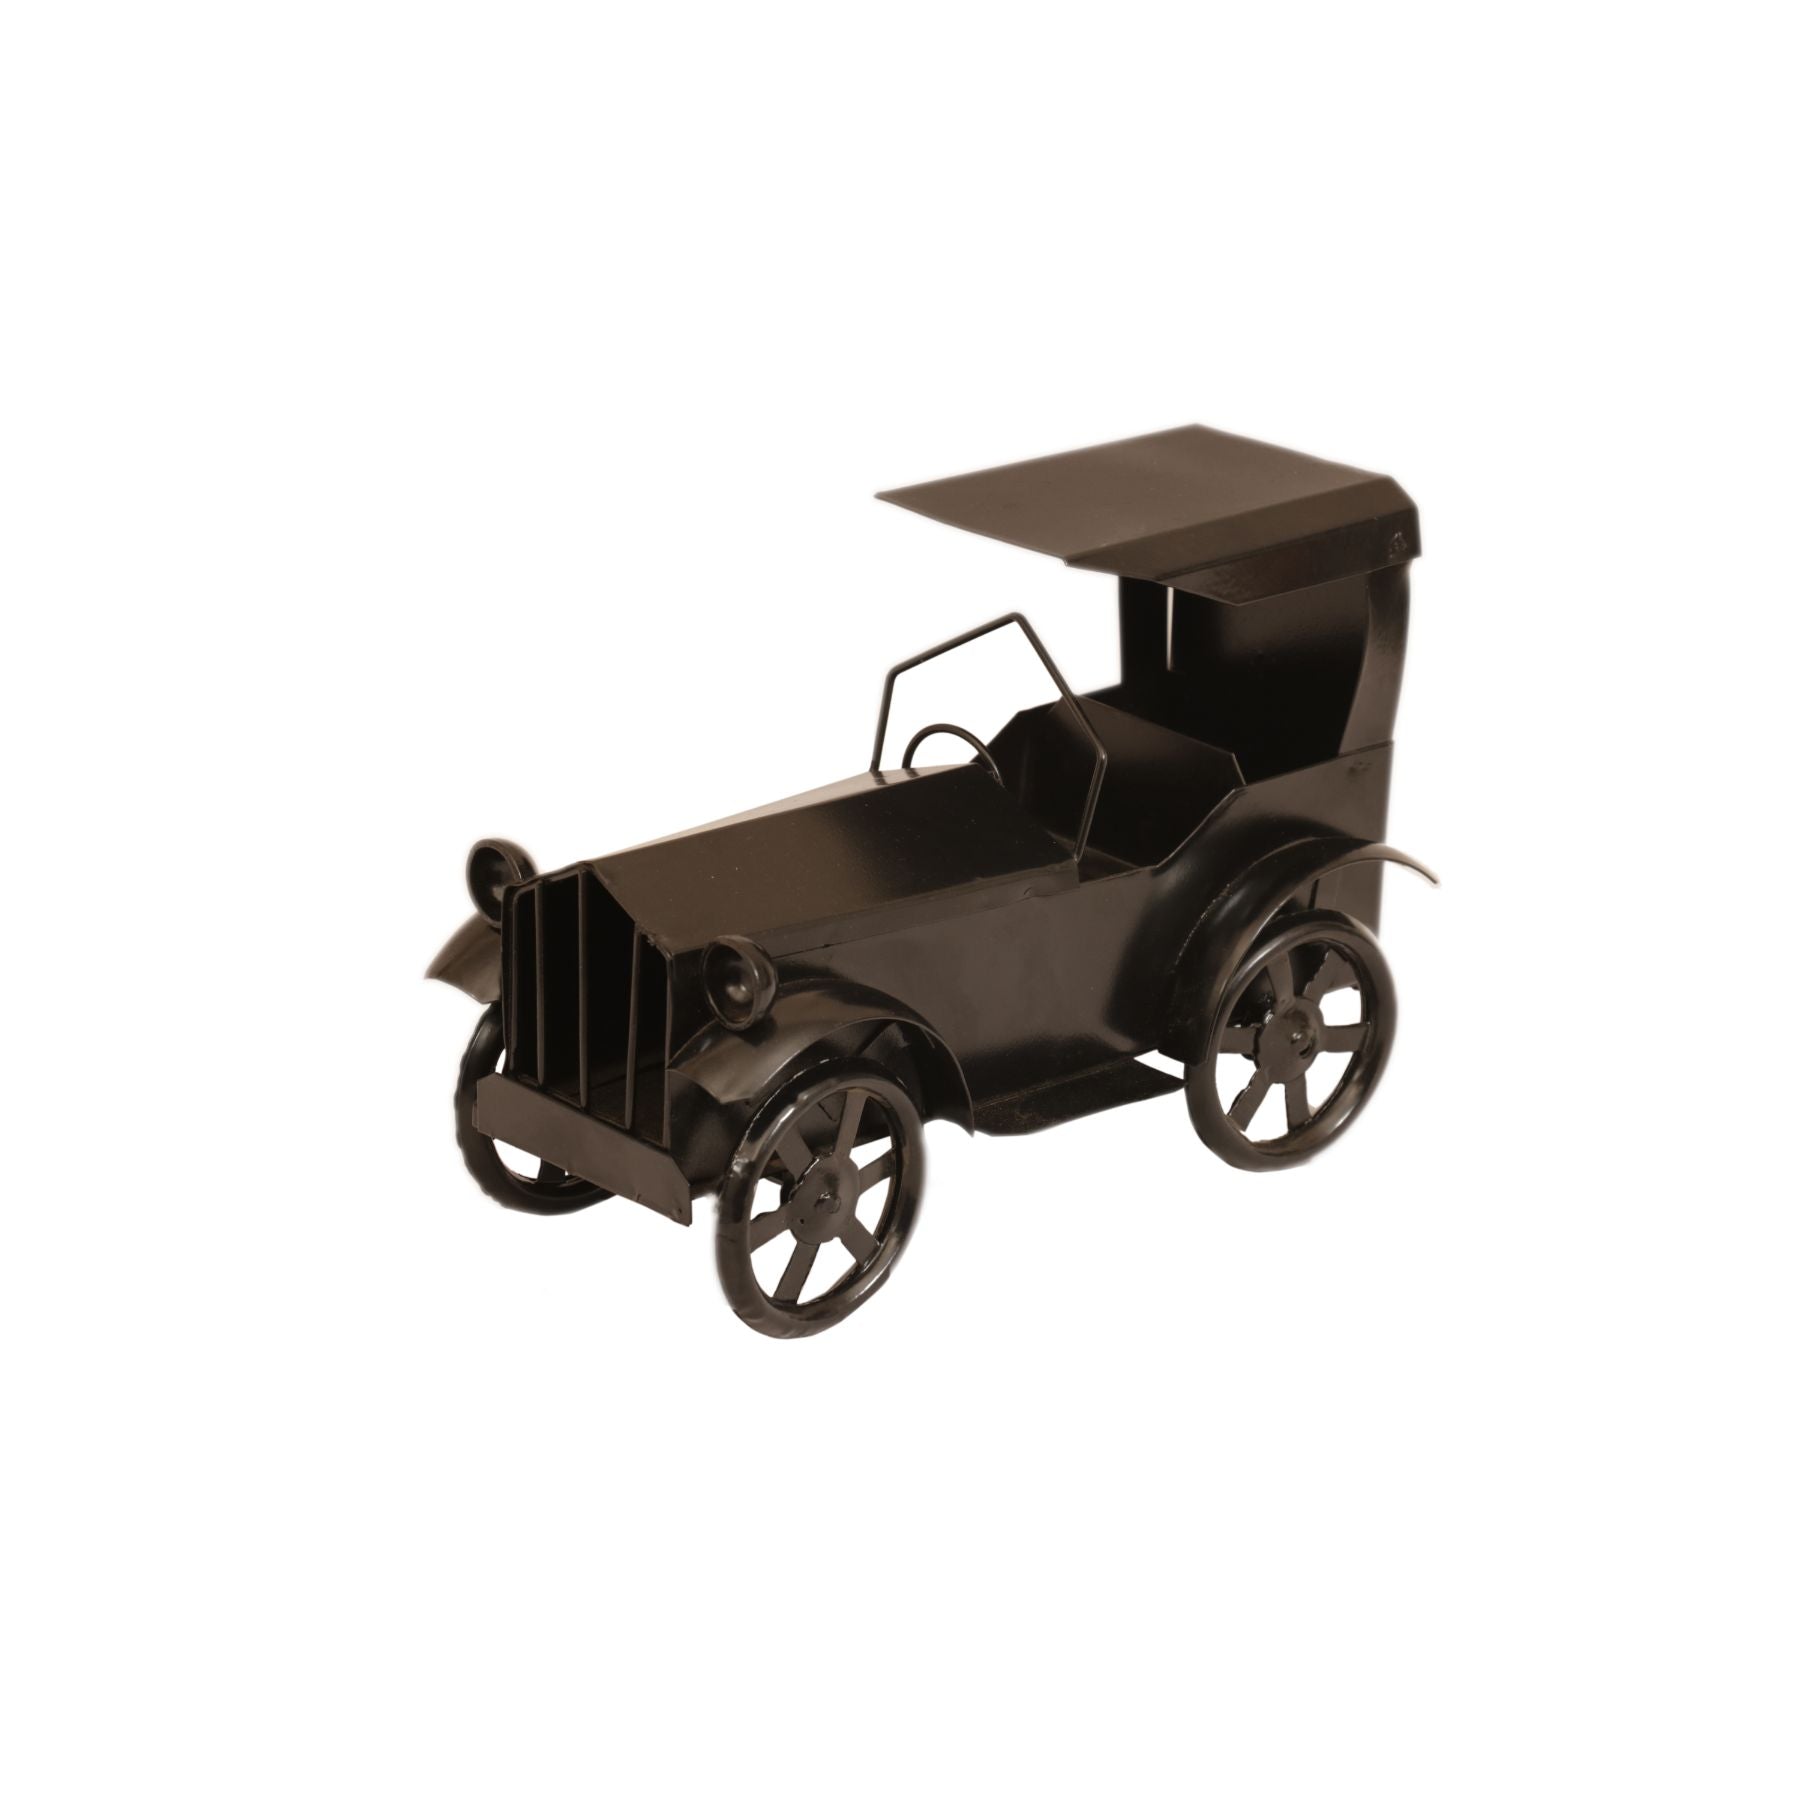 Pristine Metal Miniature Car Vehicle figurine